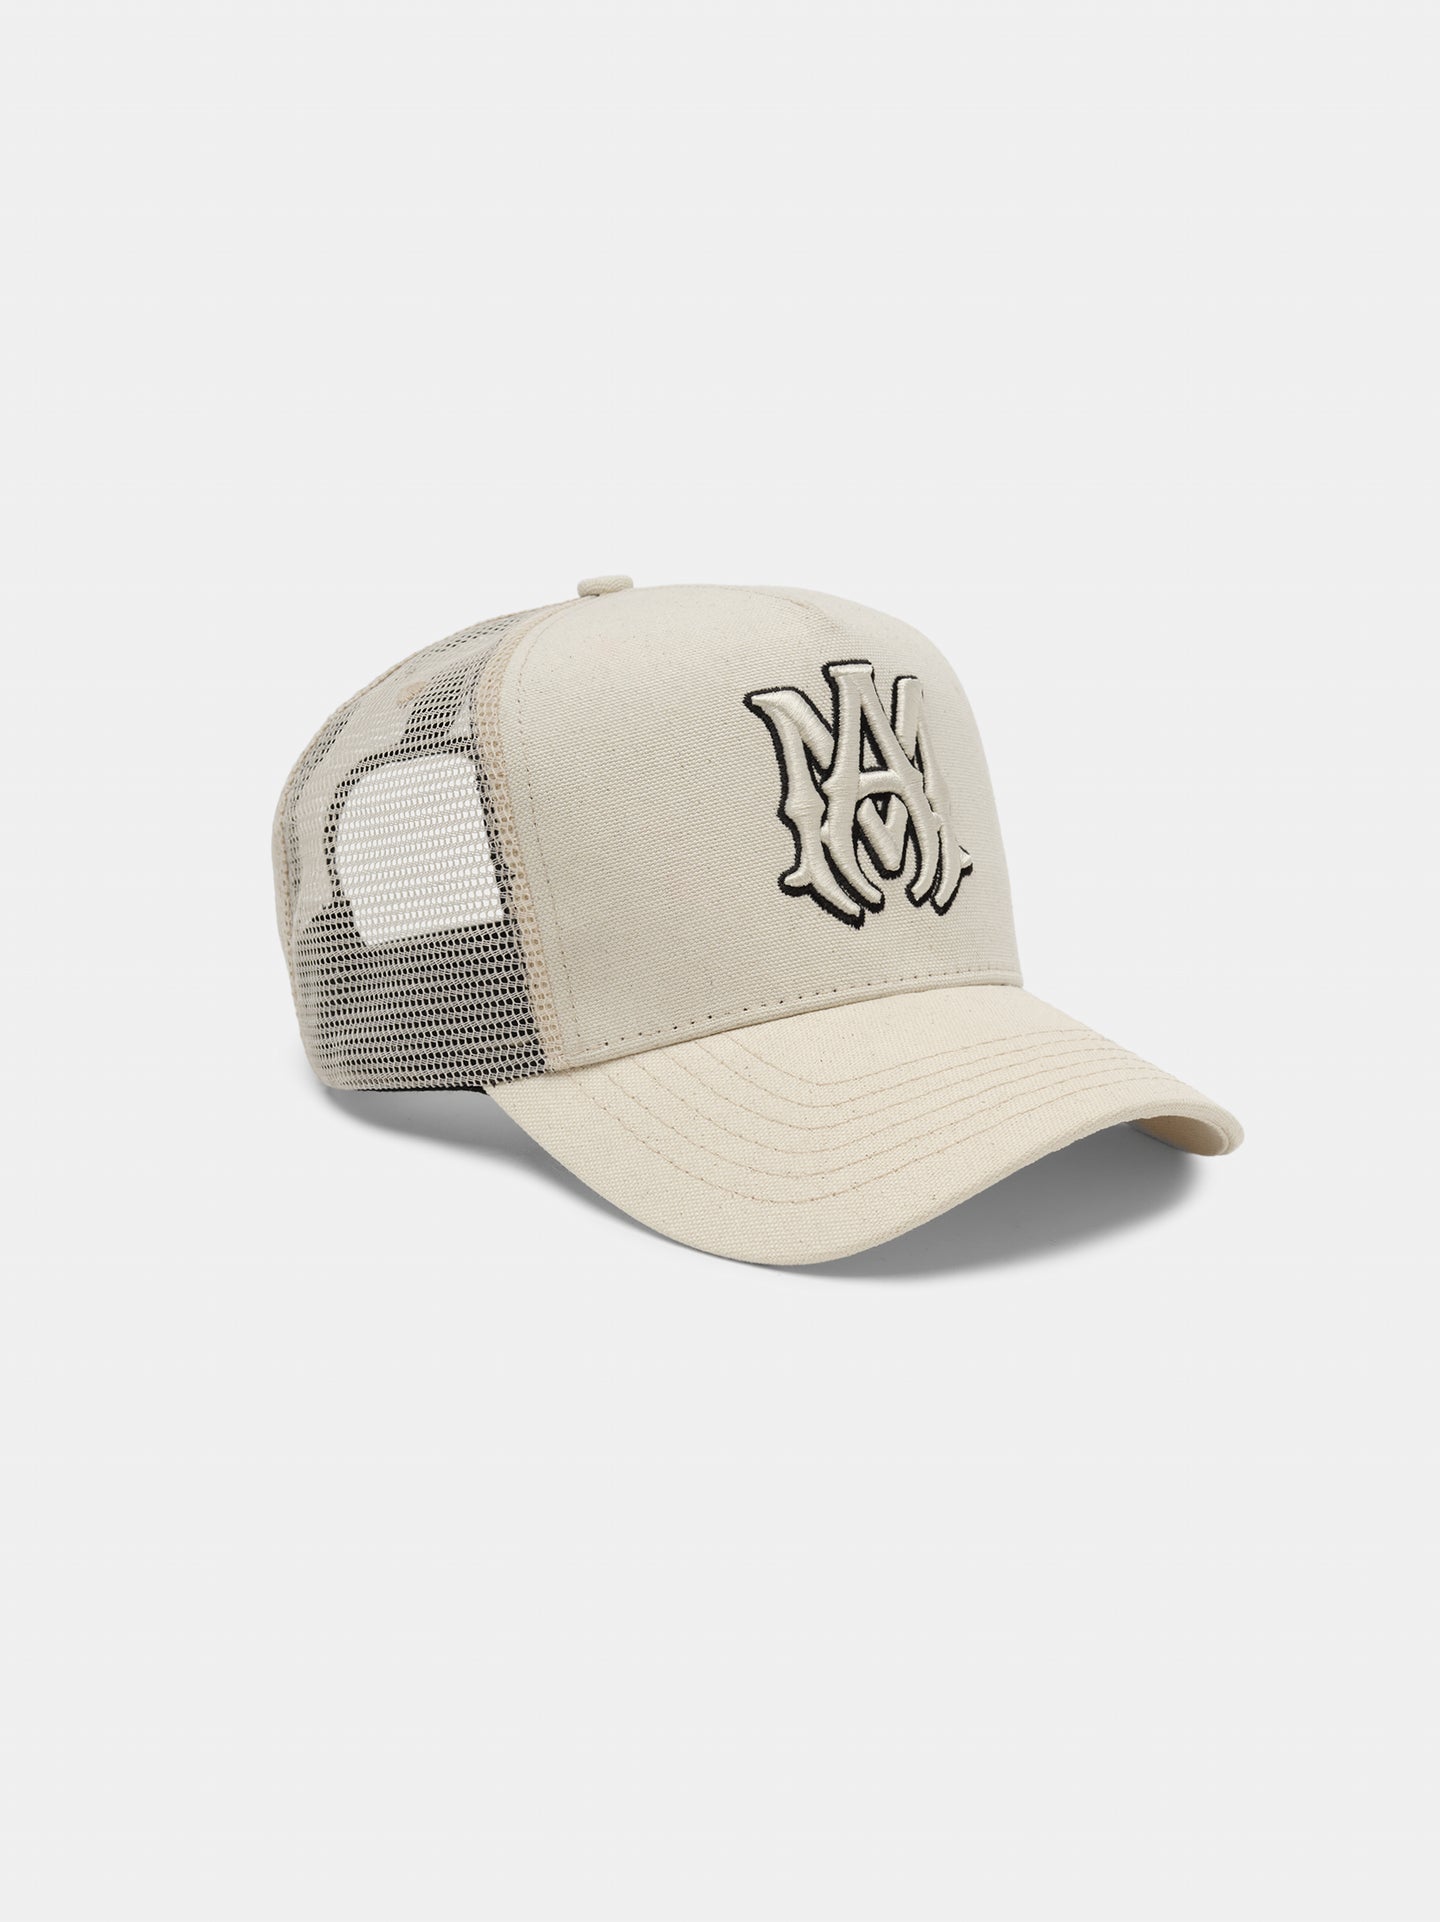 MA TRUCKER HAT - Natural